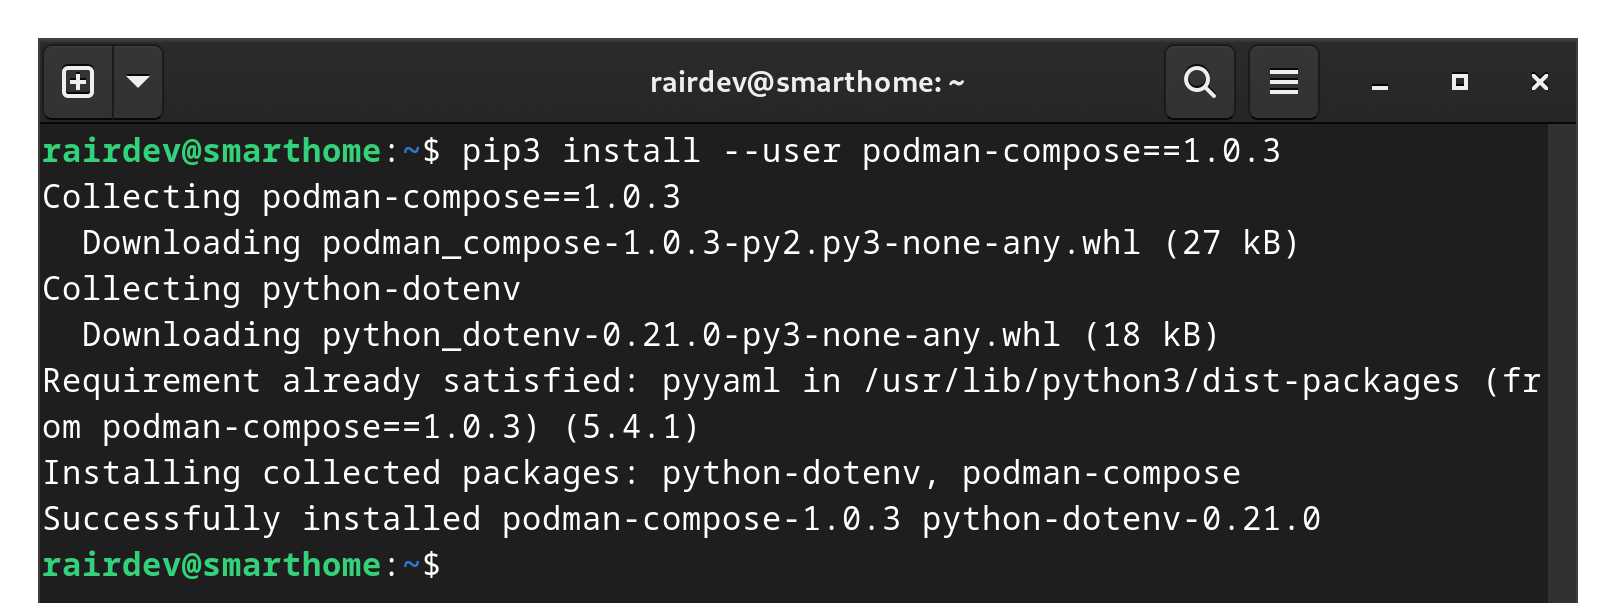 6-podman-compose-install.webp